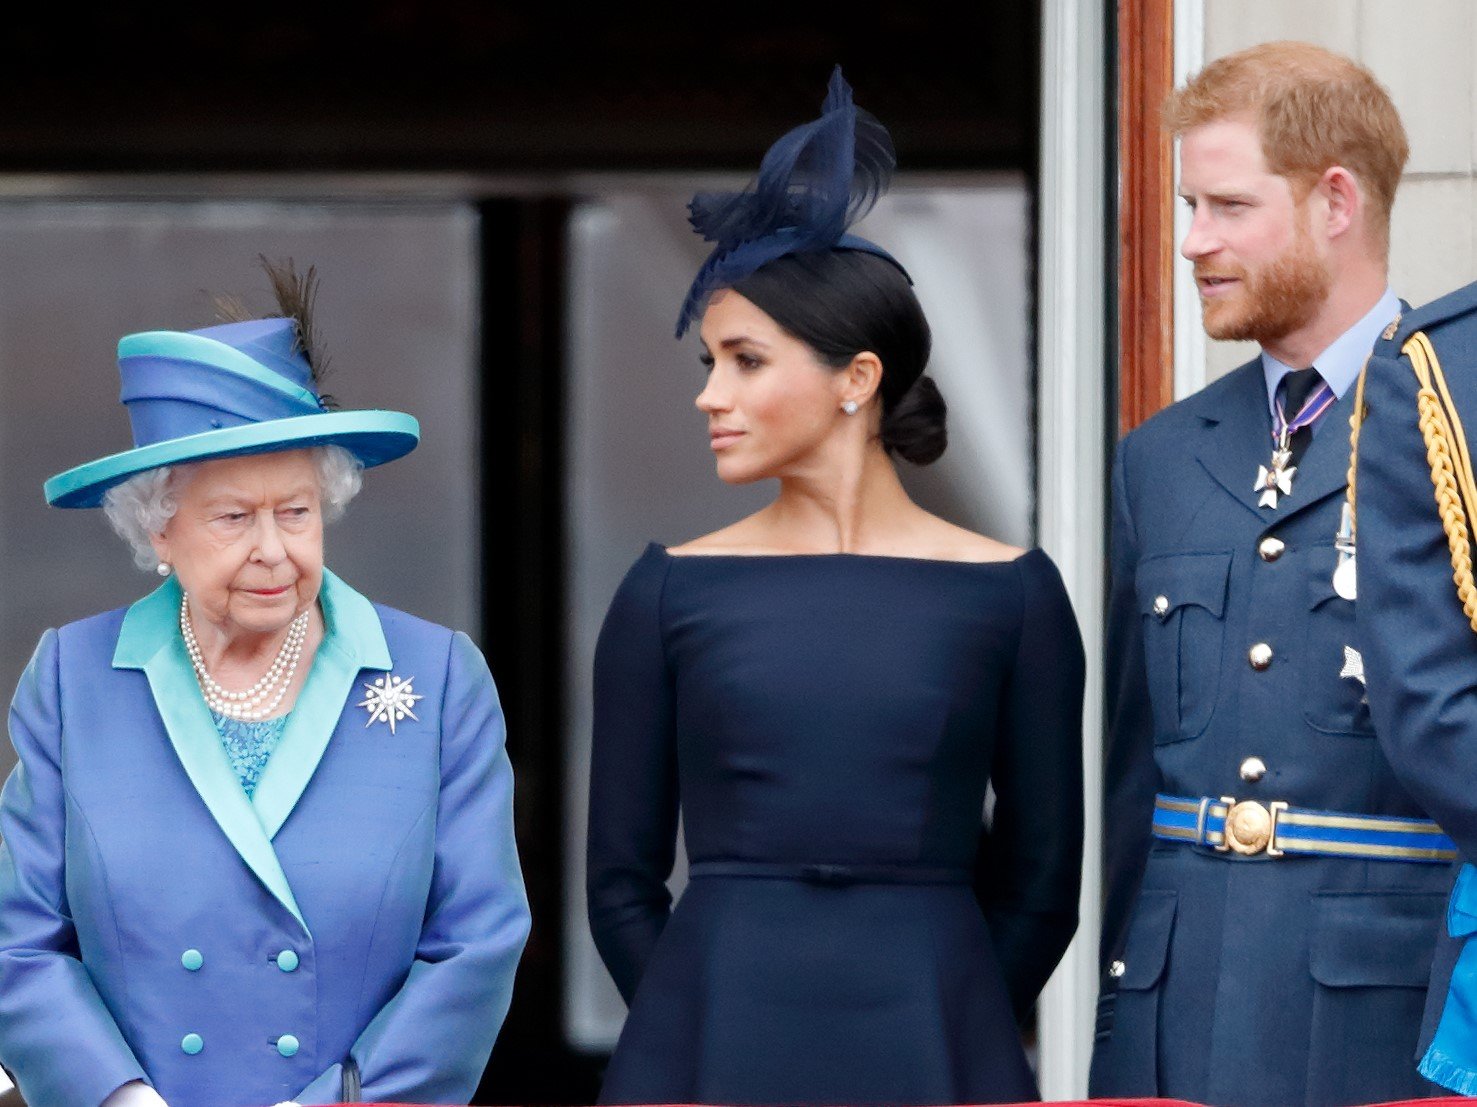 Queen Elizabeth II, Meghan Markle, and Prince Harry